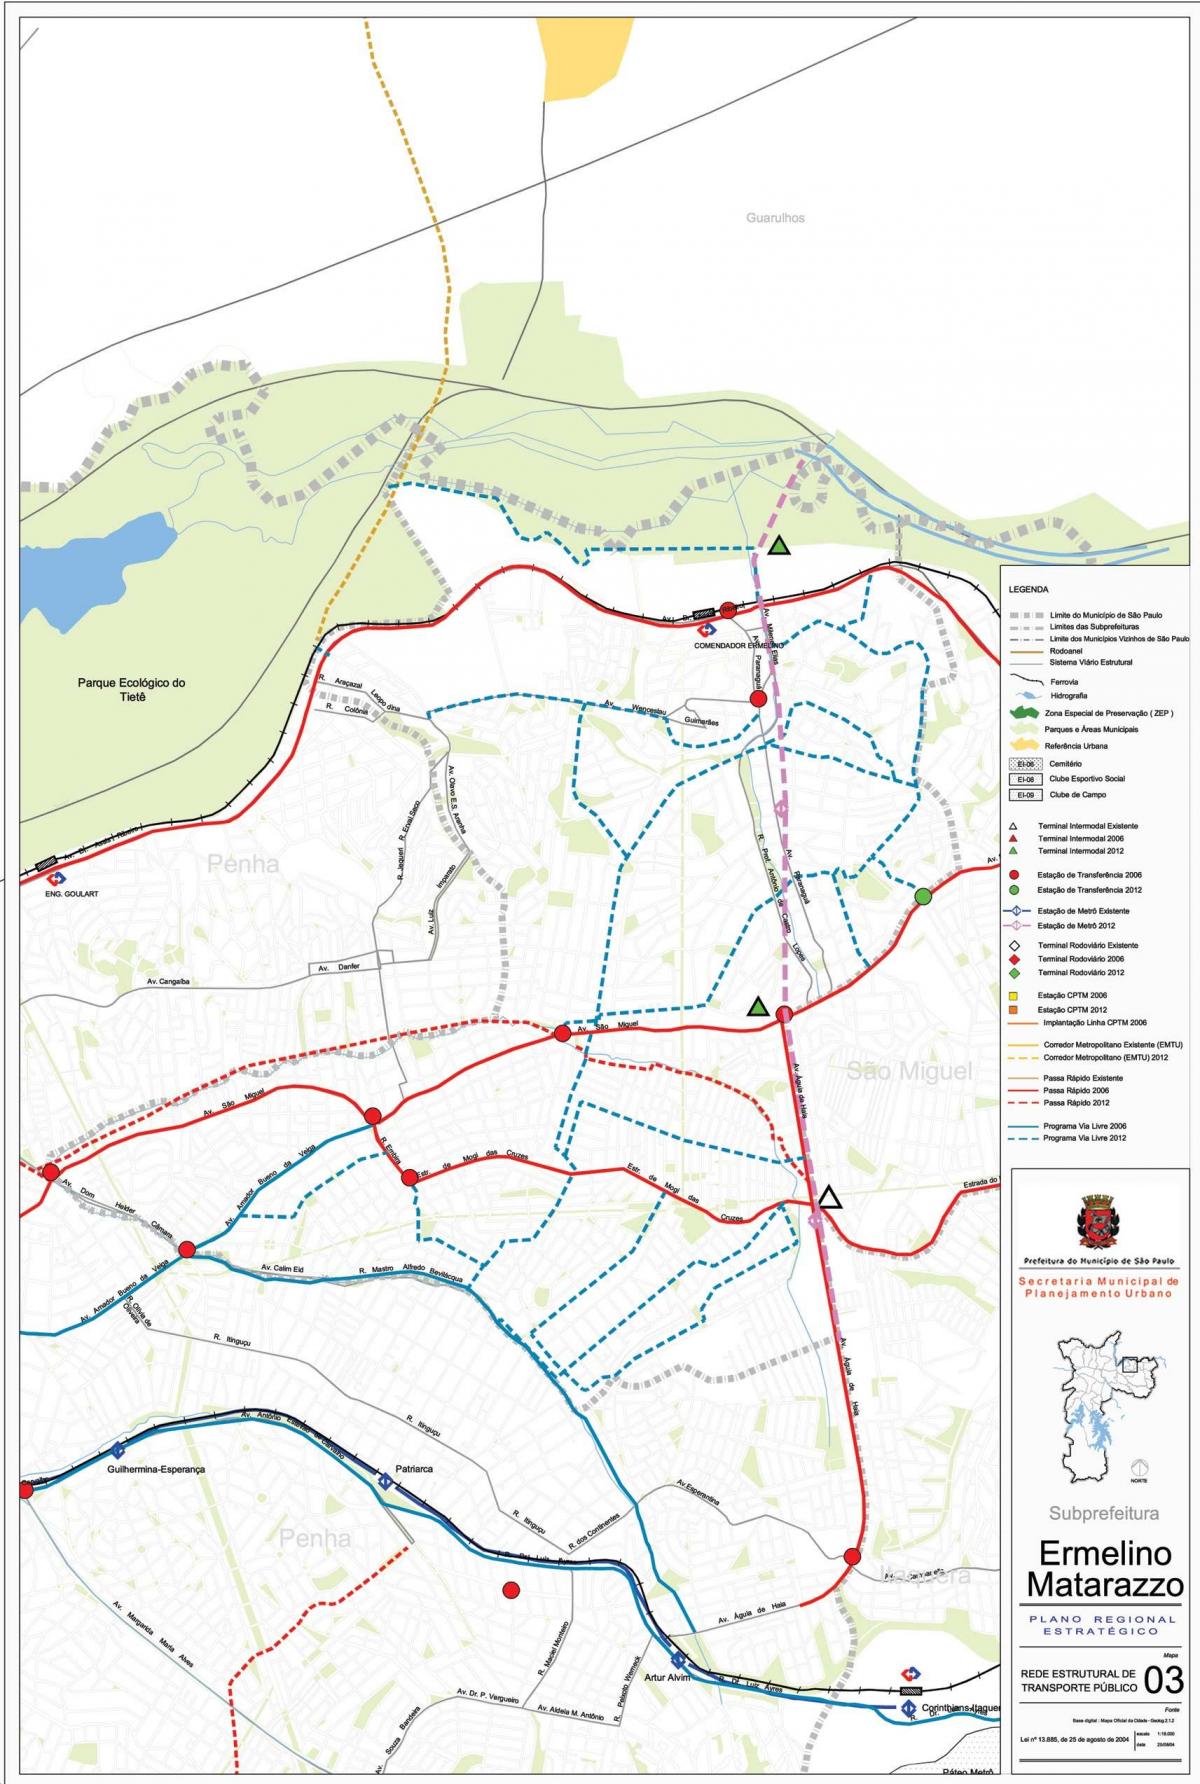 Mapa ng Ermelino Matarazzo São Paulo - Pampublikong transports